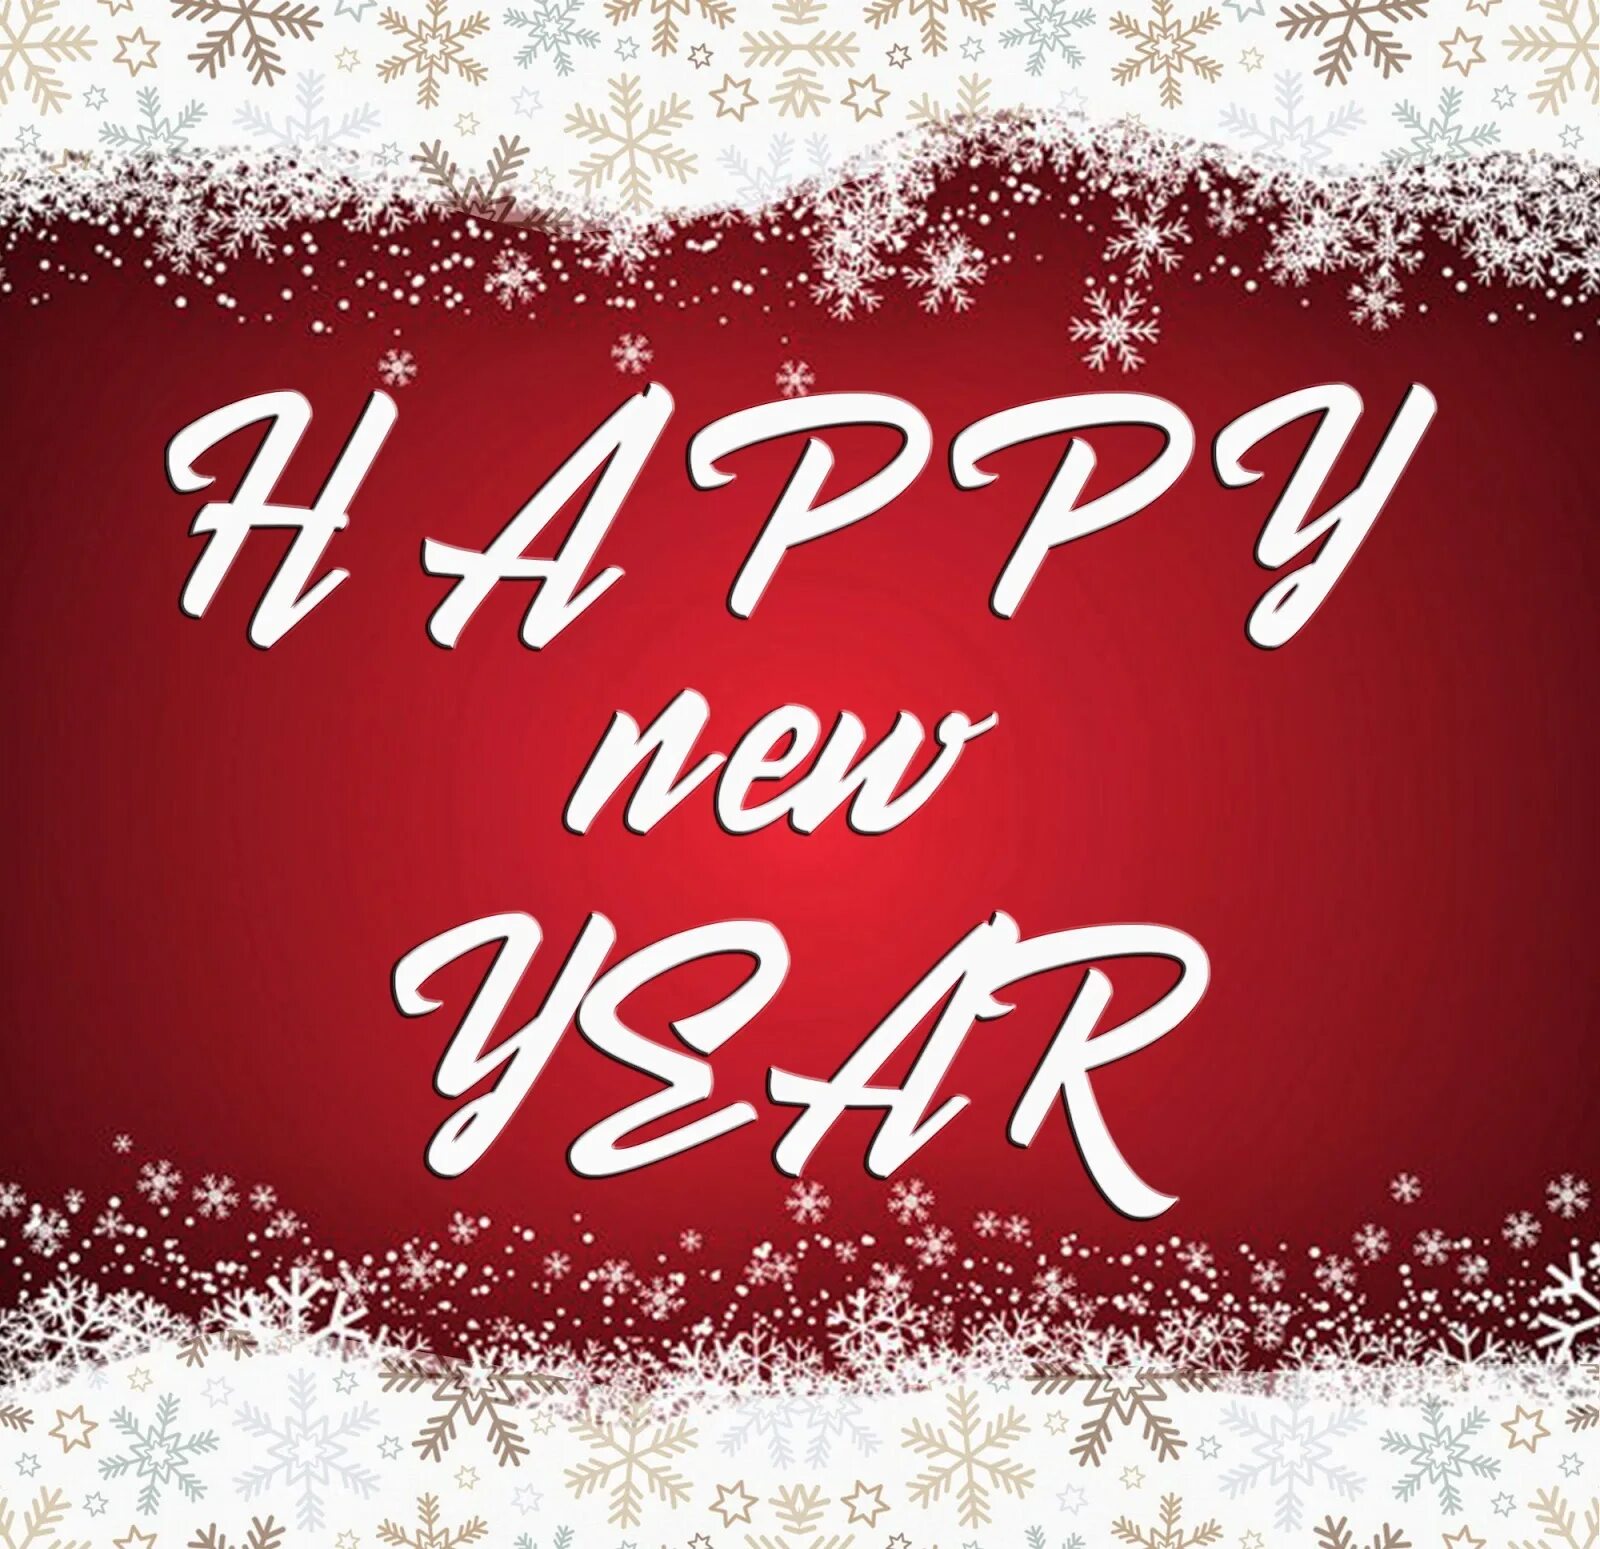 Happy new year be happy. New year надпись. Хэппи Нью еа. С новым годом на хинди. New year надпись Новогодняя.